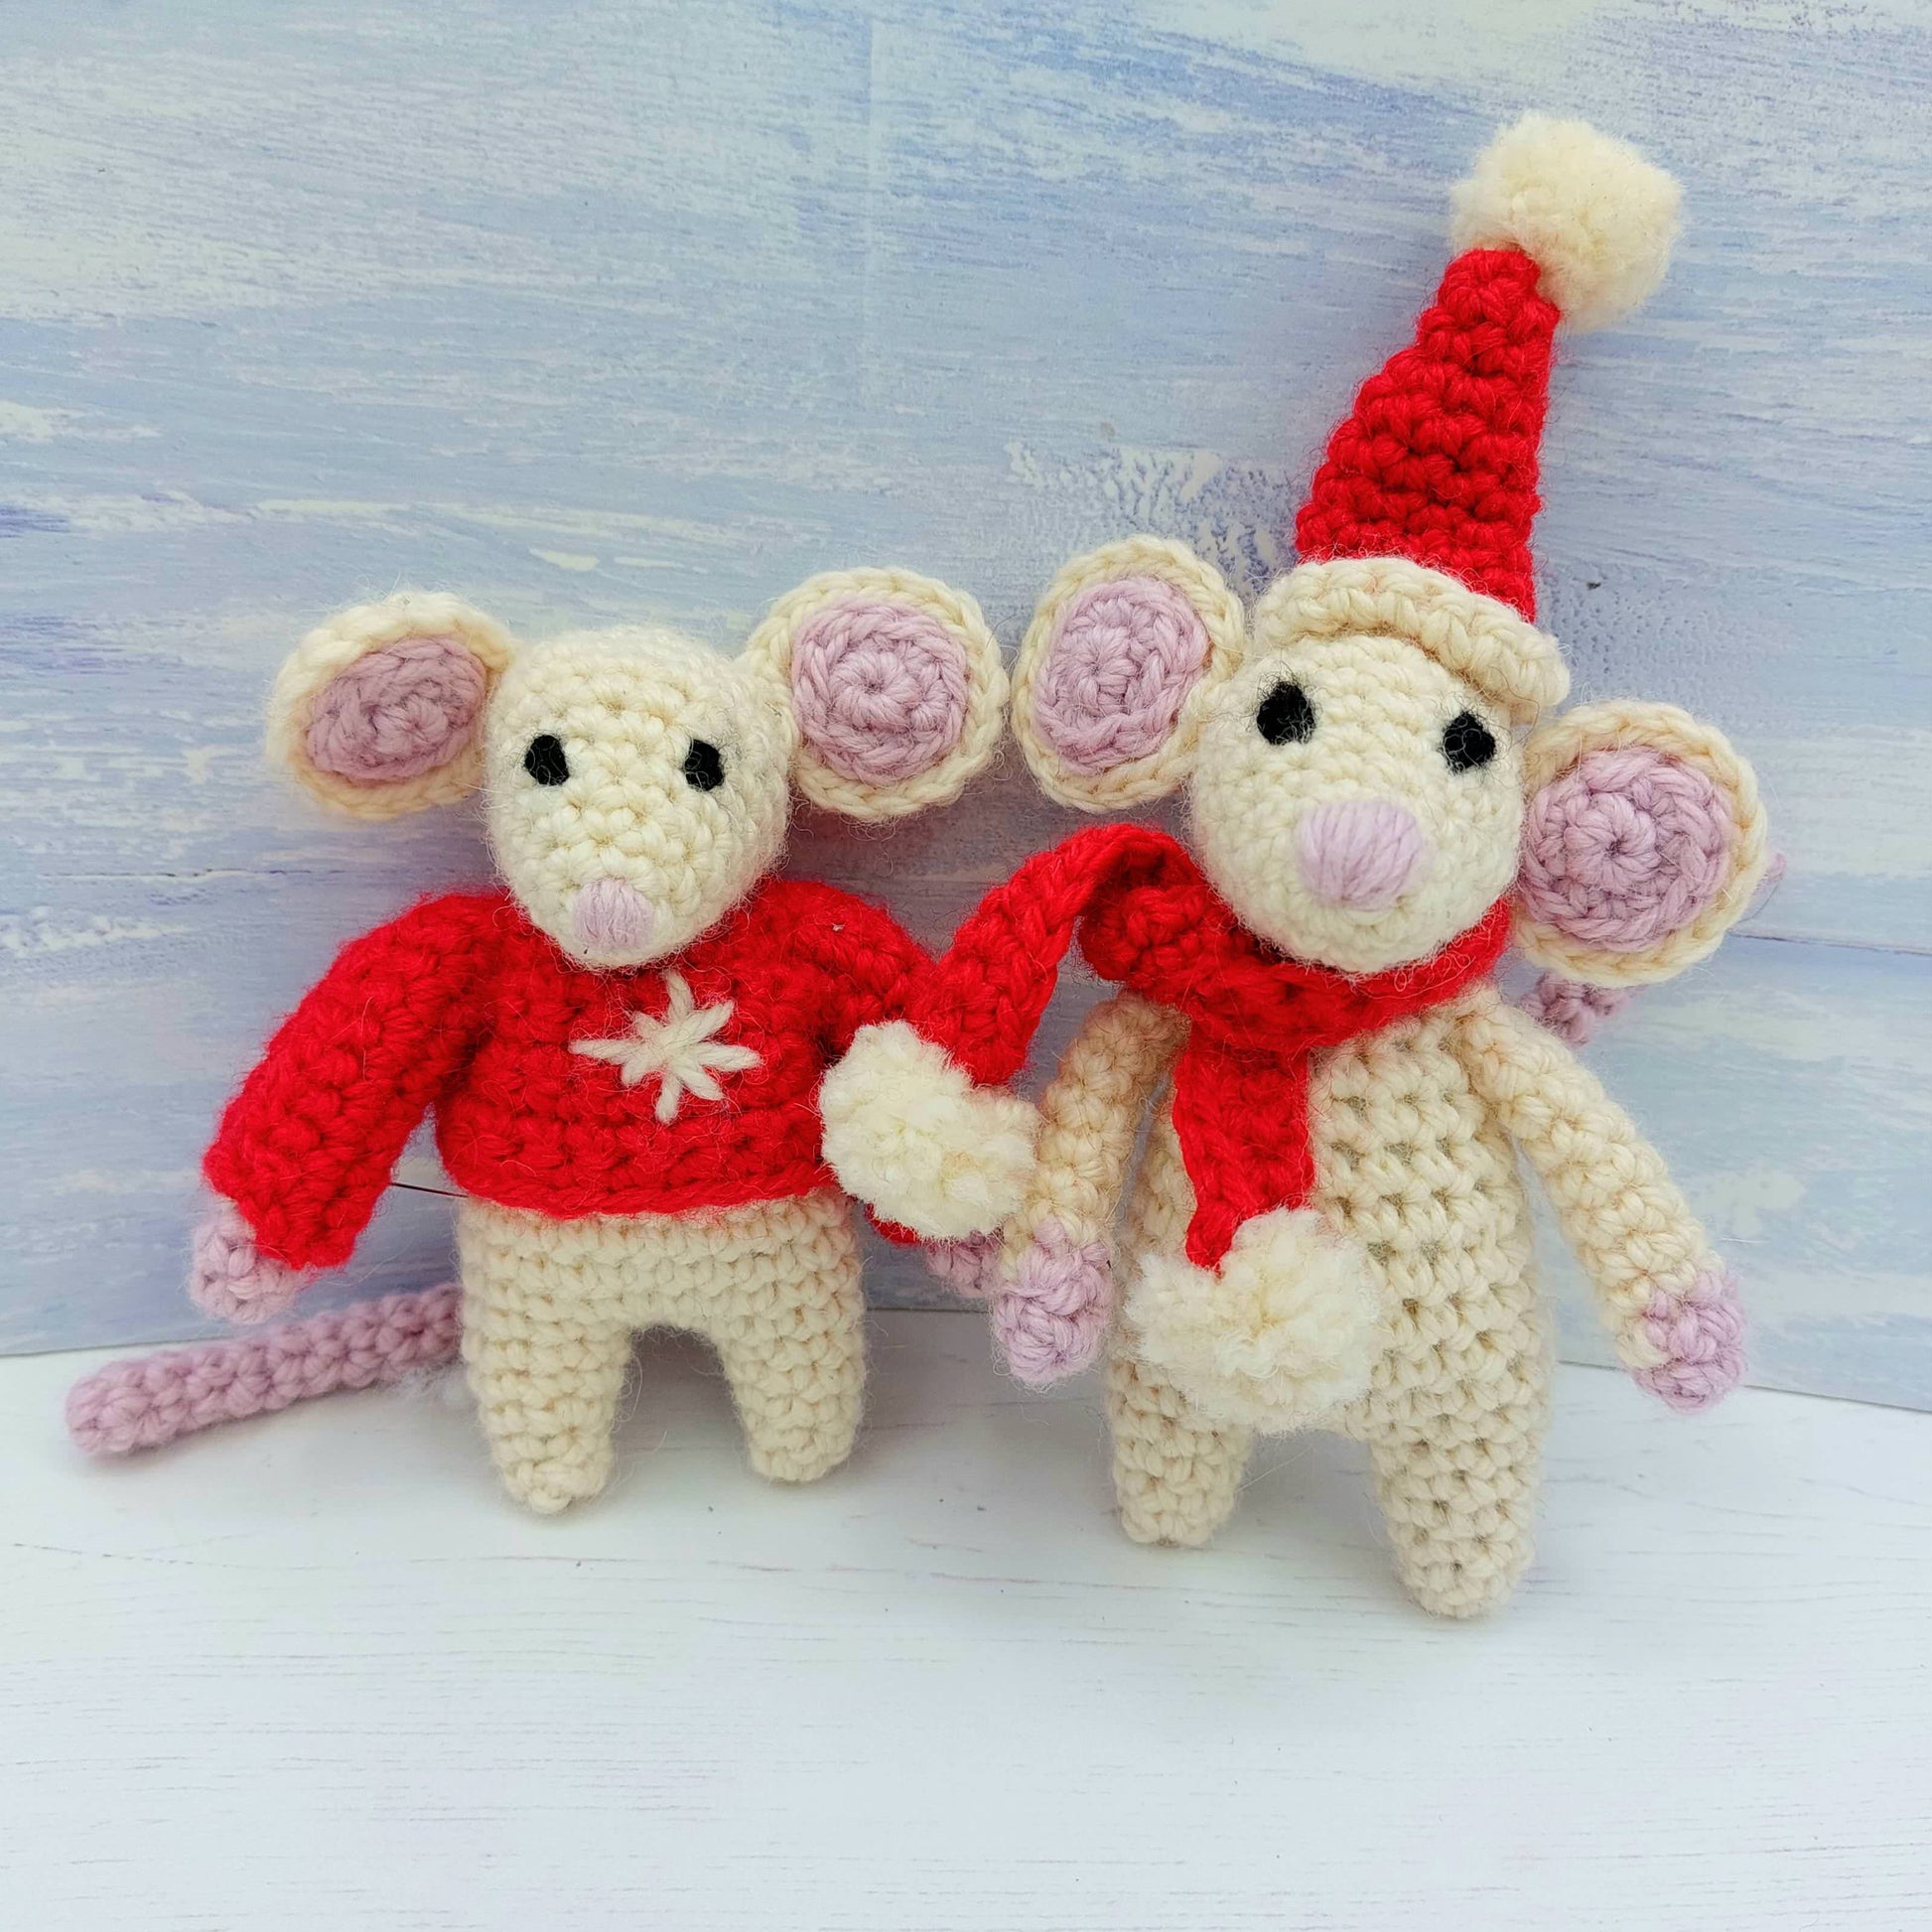 Two white Christmas Crochet Mice